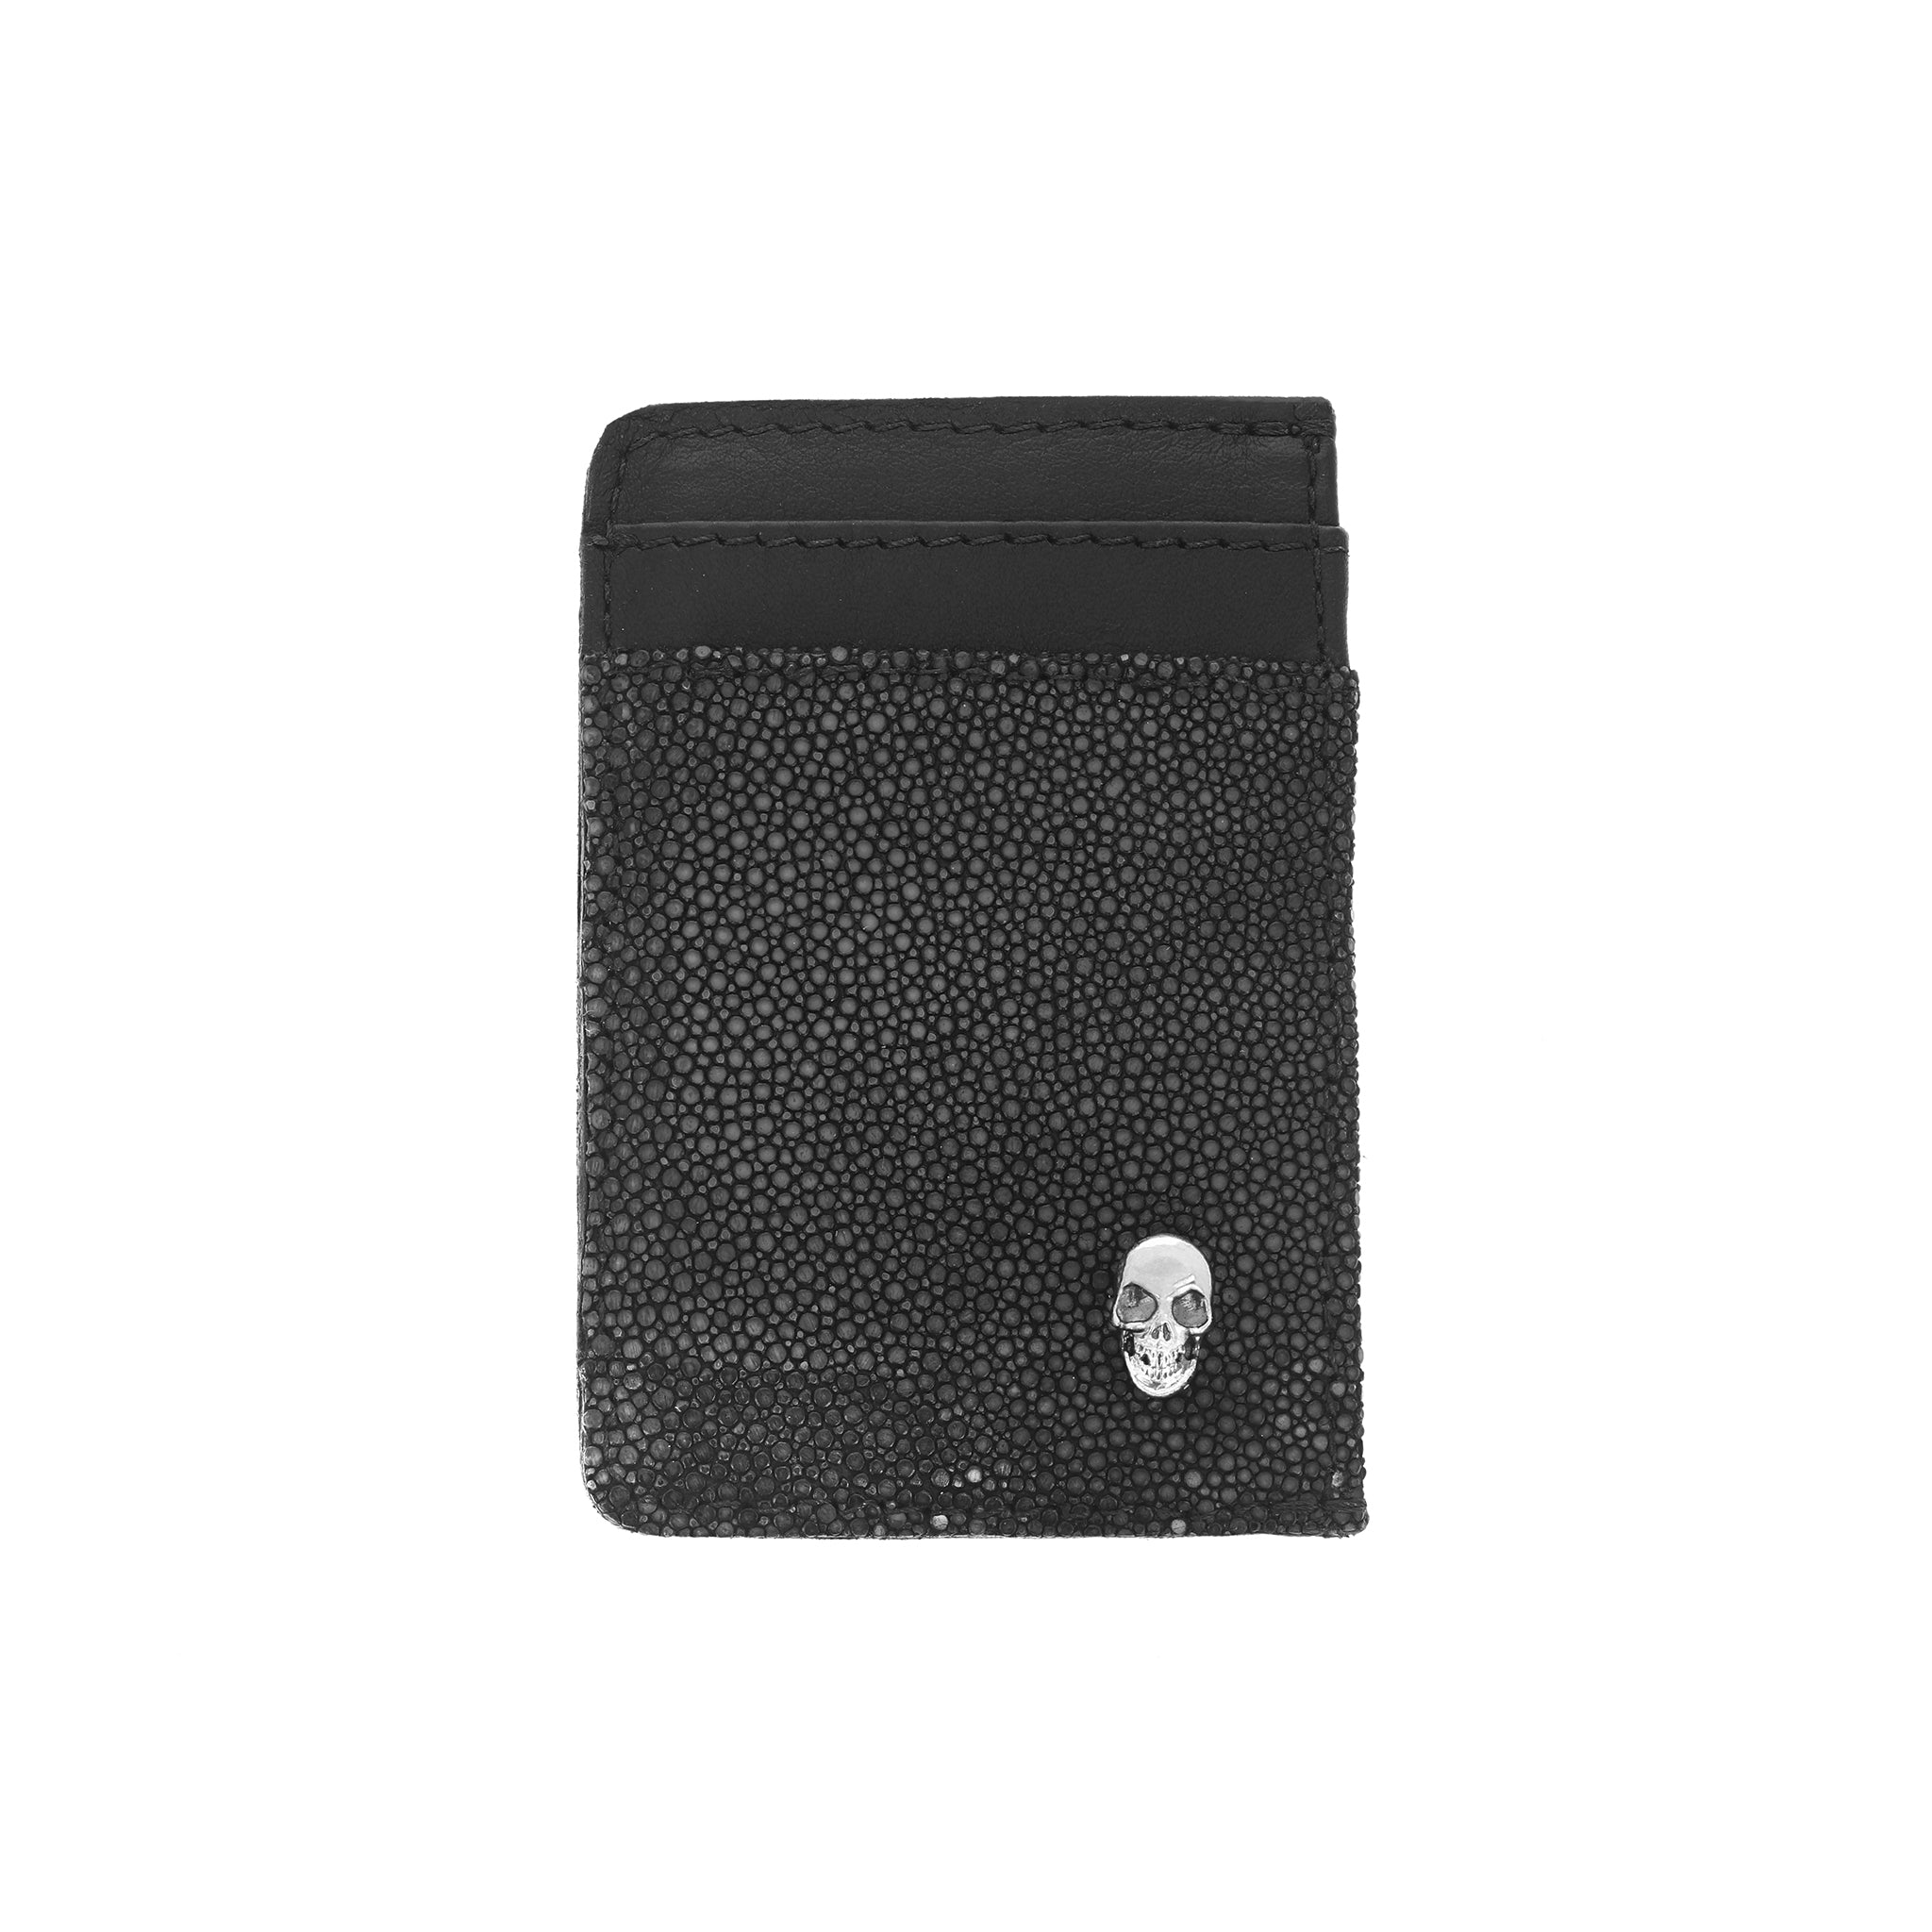 Leather Passport Case / Credit Card Case Wallet - Onyx Black